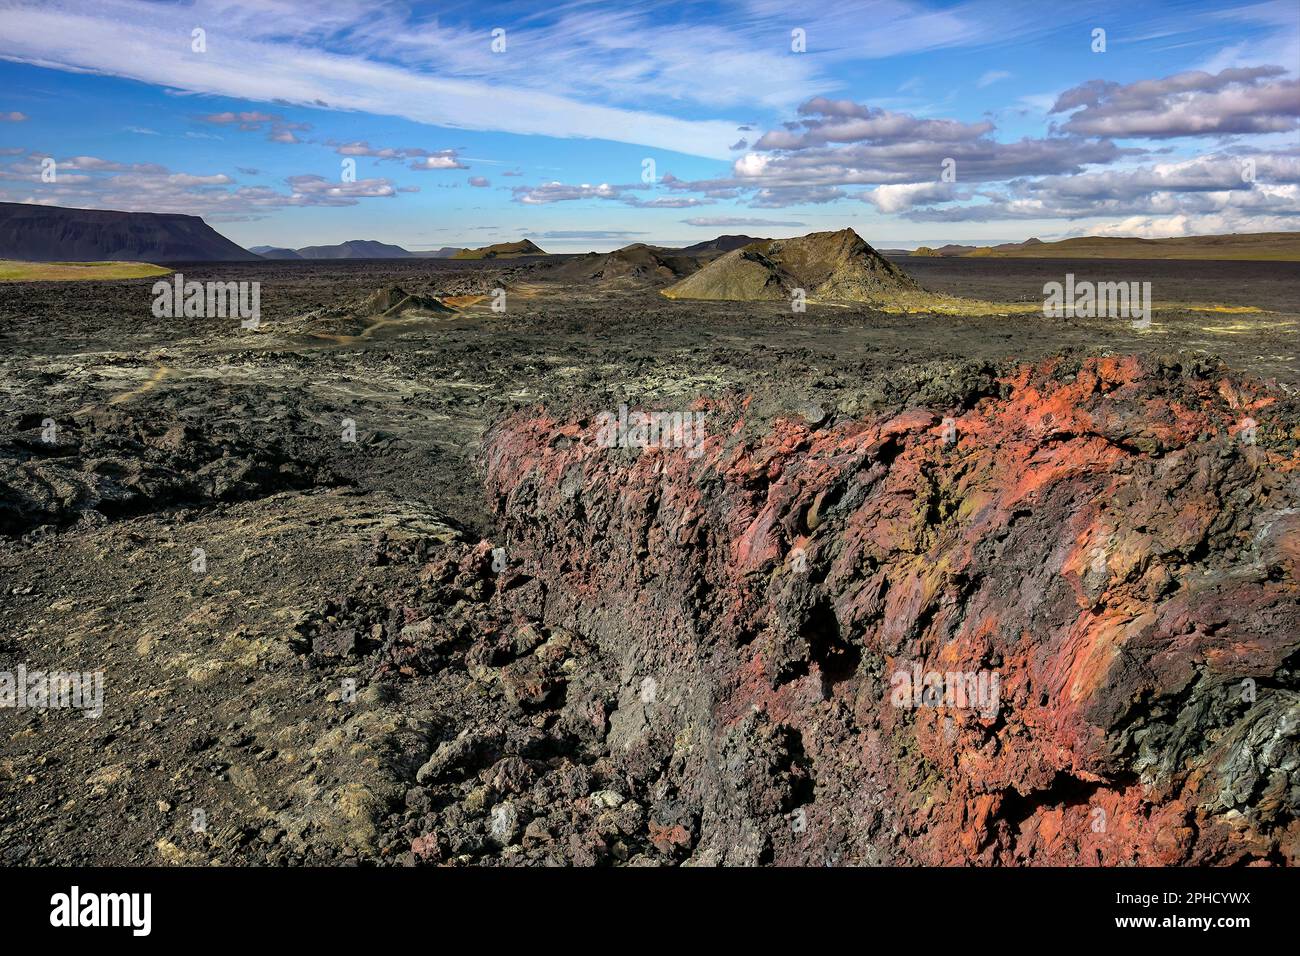 Lava Field w/Iron Oxide & Cinder Cone, Leirhnjùkuri, Iceland (near Lake Myvatn) Stock Photo